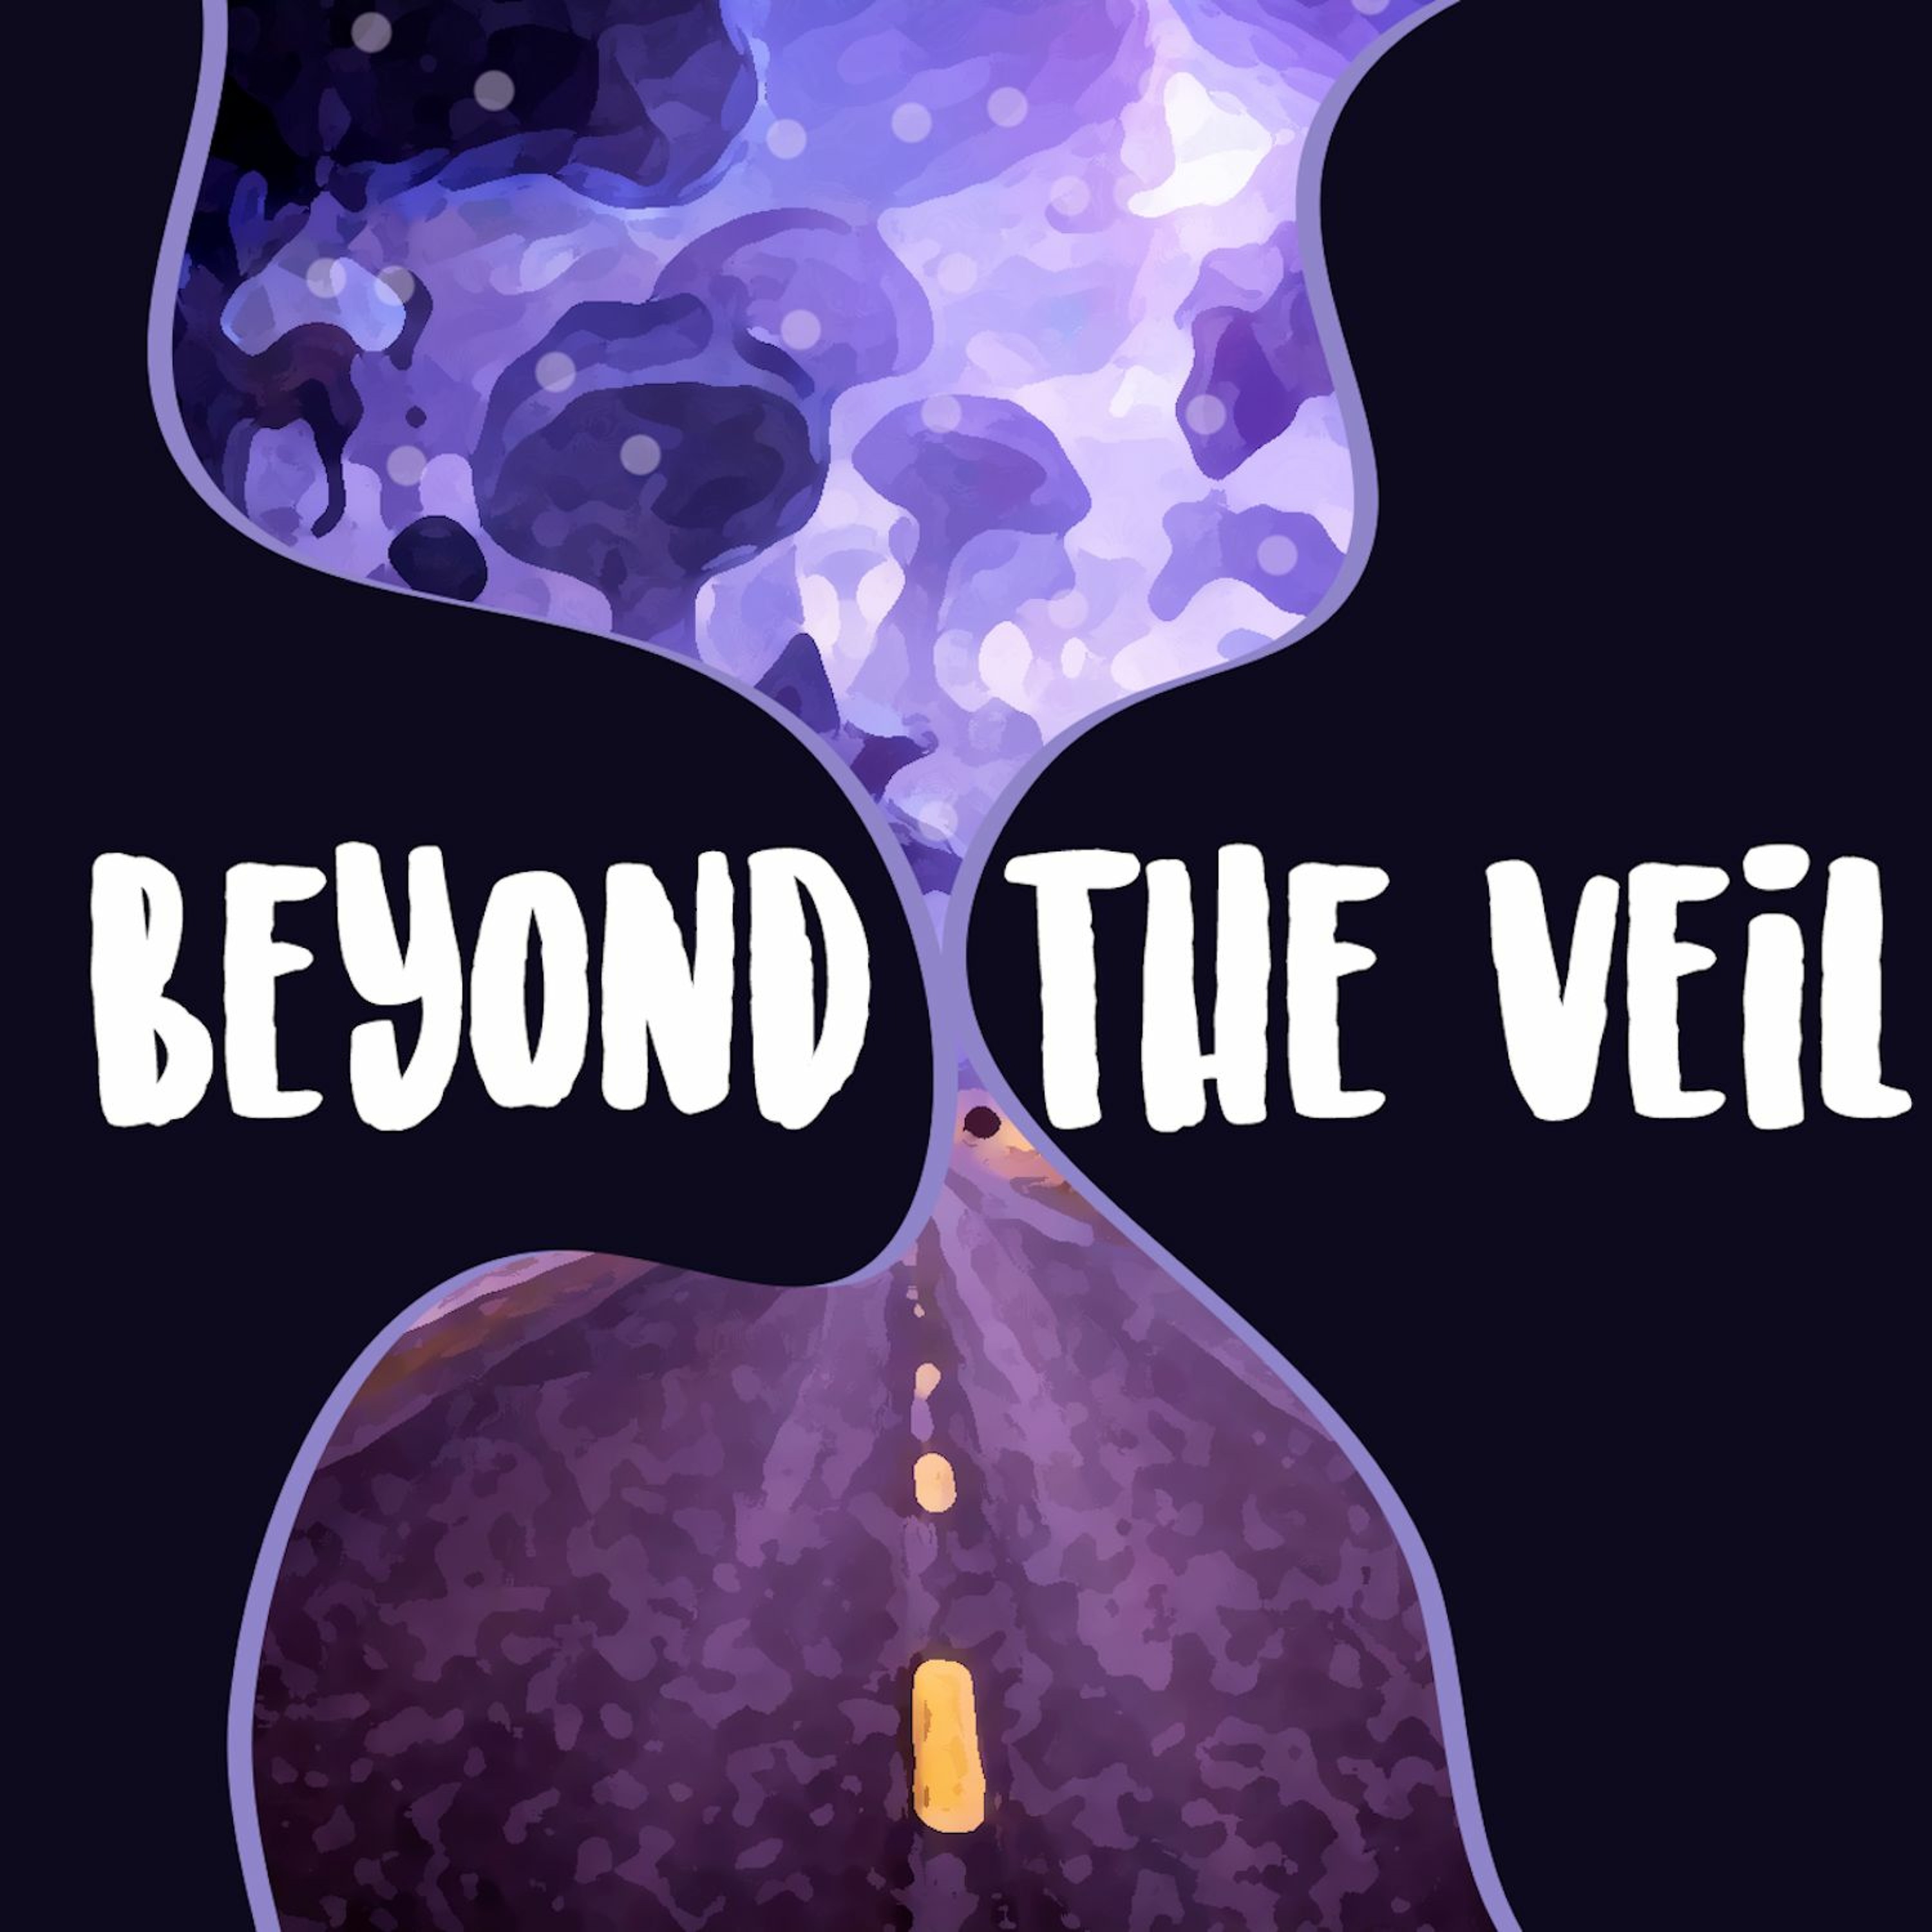 "Beyond the Veil" Podcast